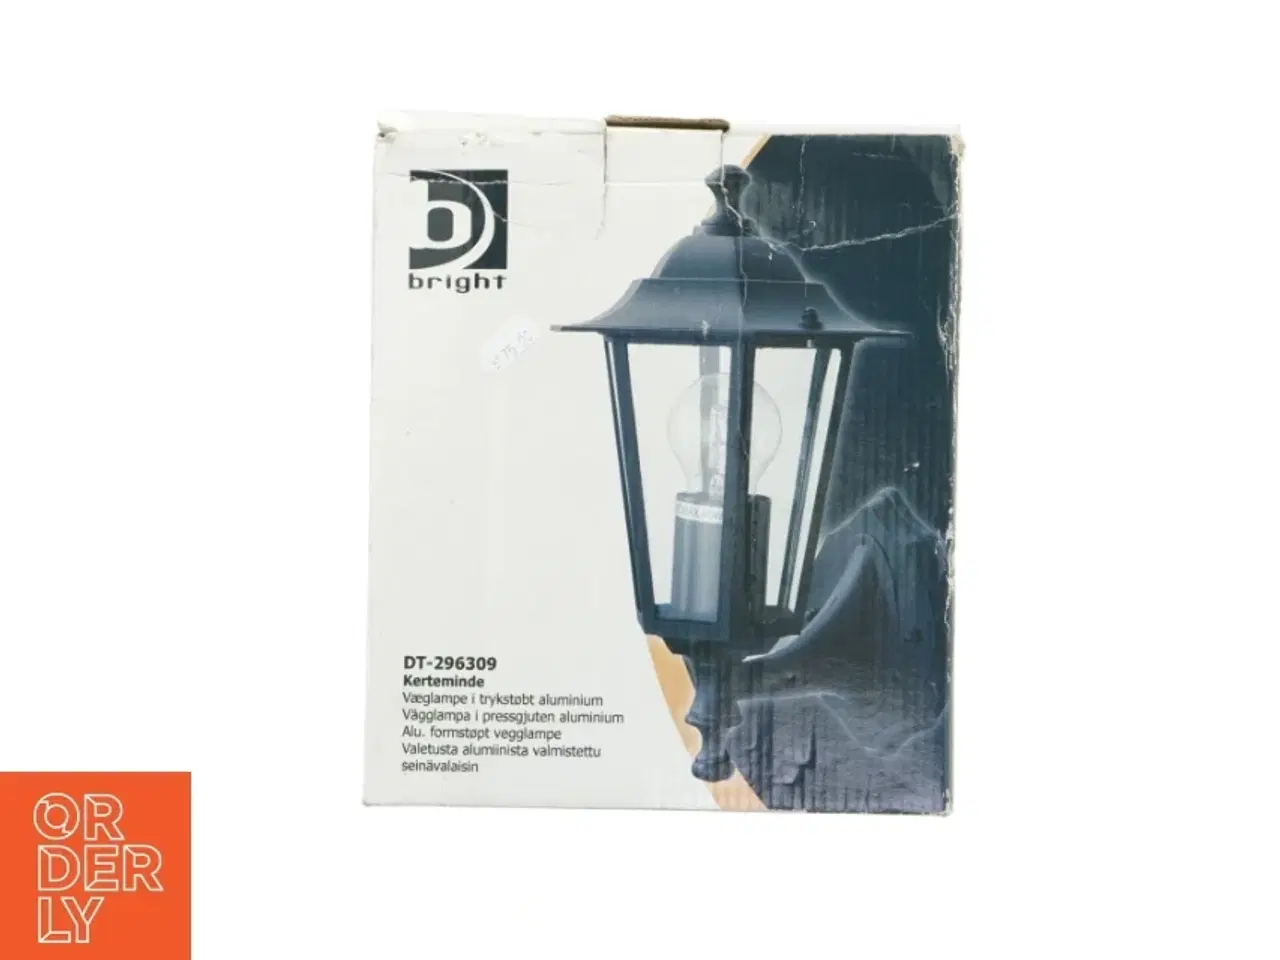 Billede 1 - Udendørslampe i støbt aluminium fra Bright (str. 28 x 16 cm)